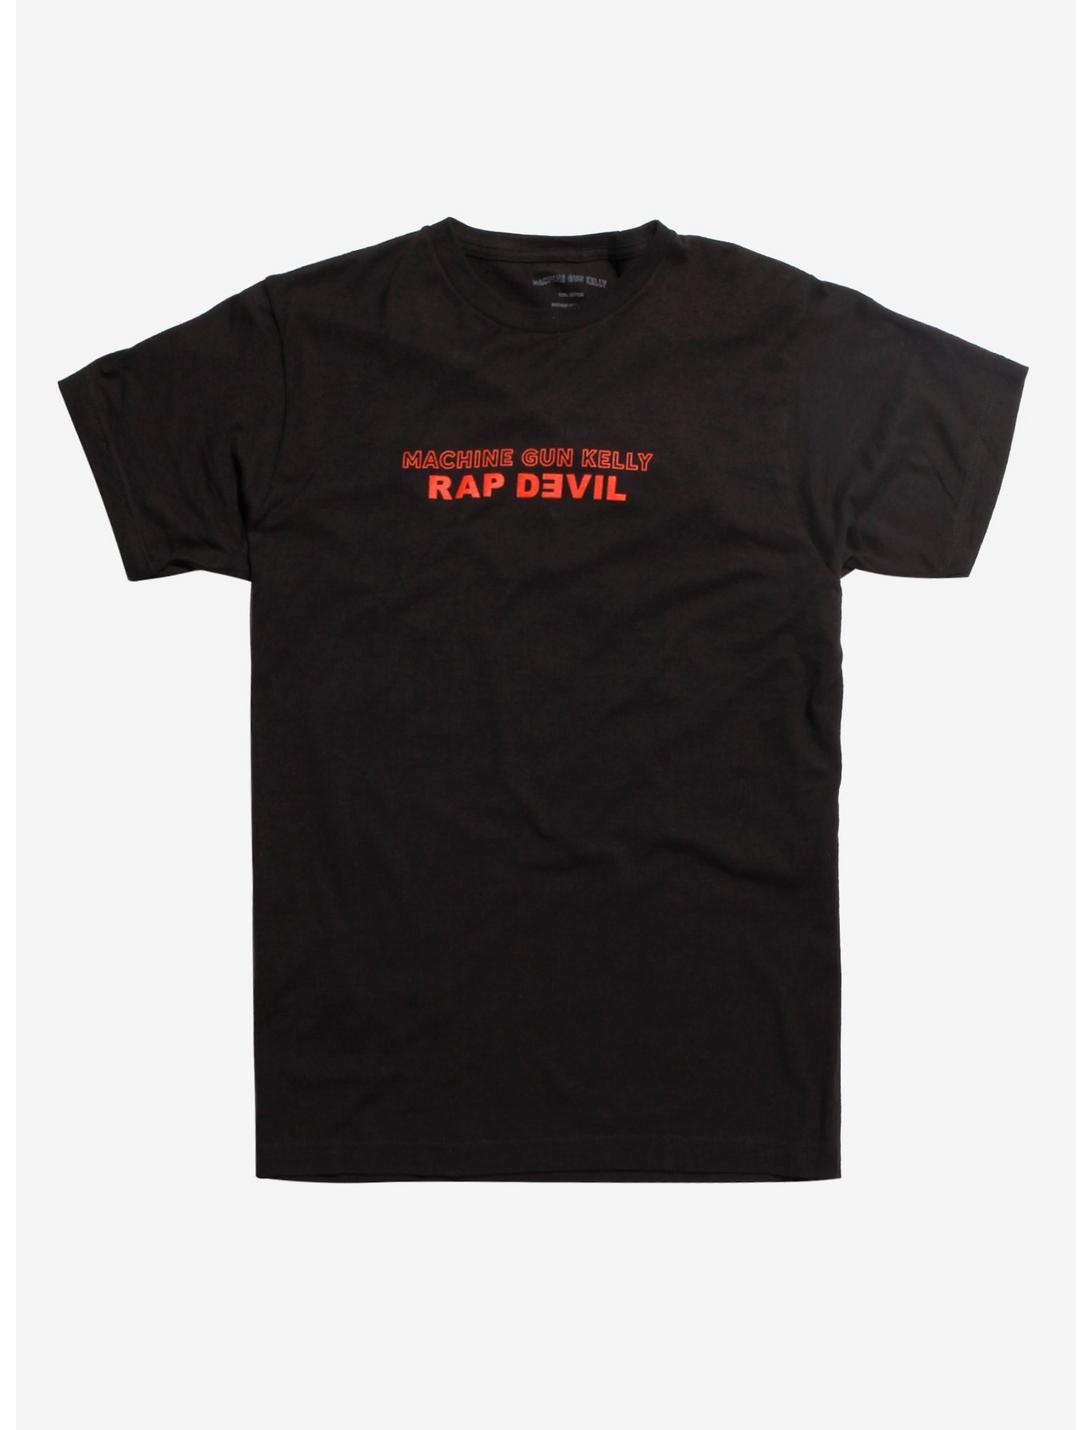 Machine Gun Kelly Rap Devil T-shirt, BLACK, hi-res